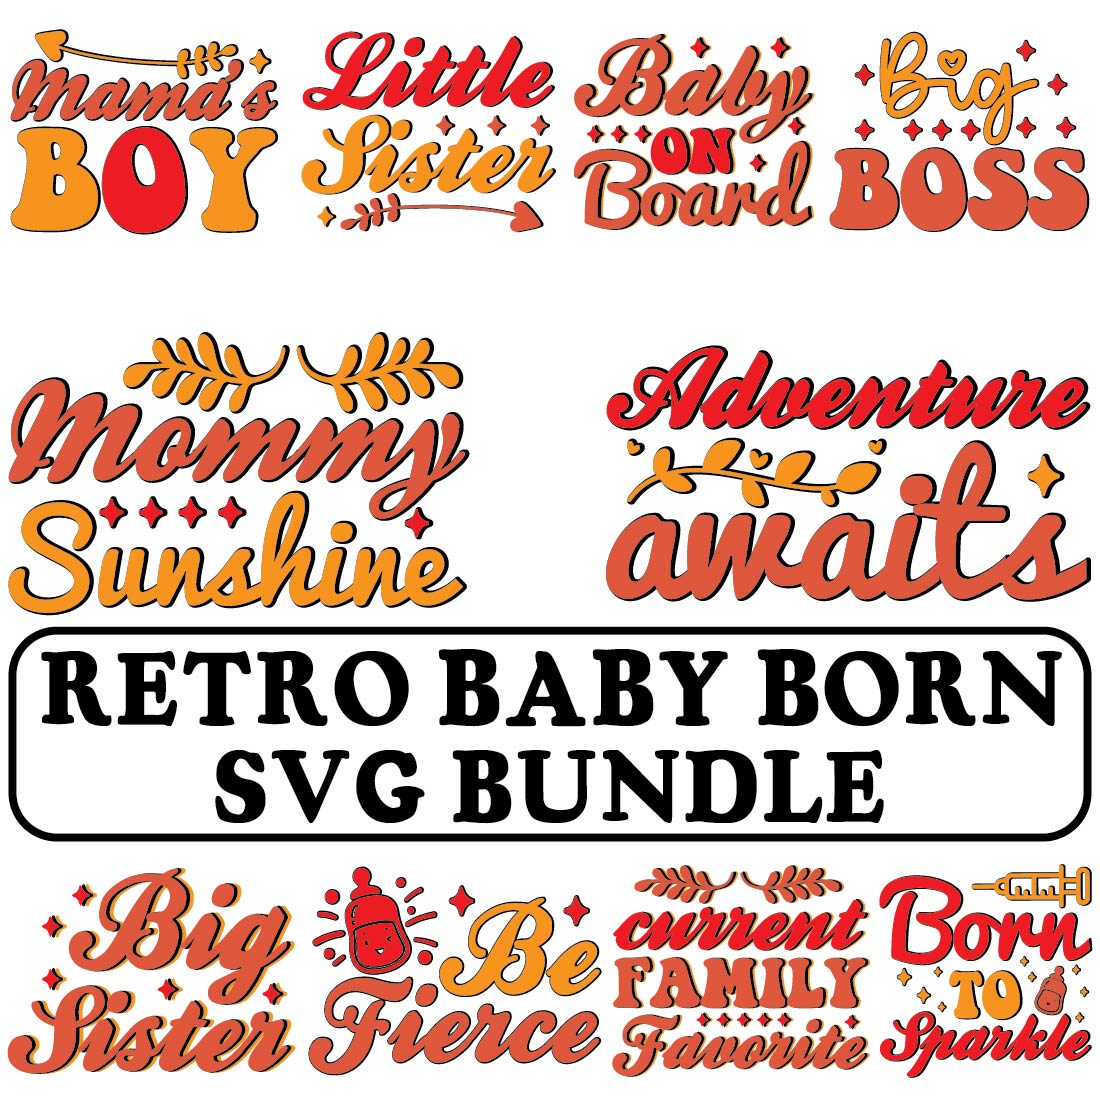 Retro Baby Born SVG Bundle preview image.